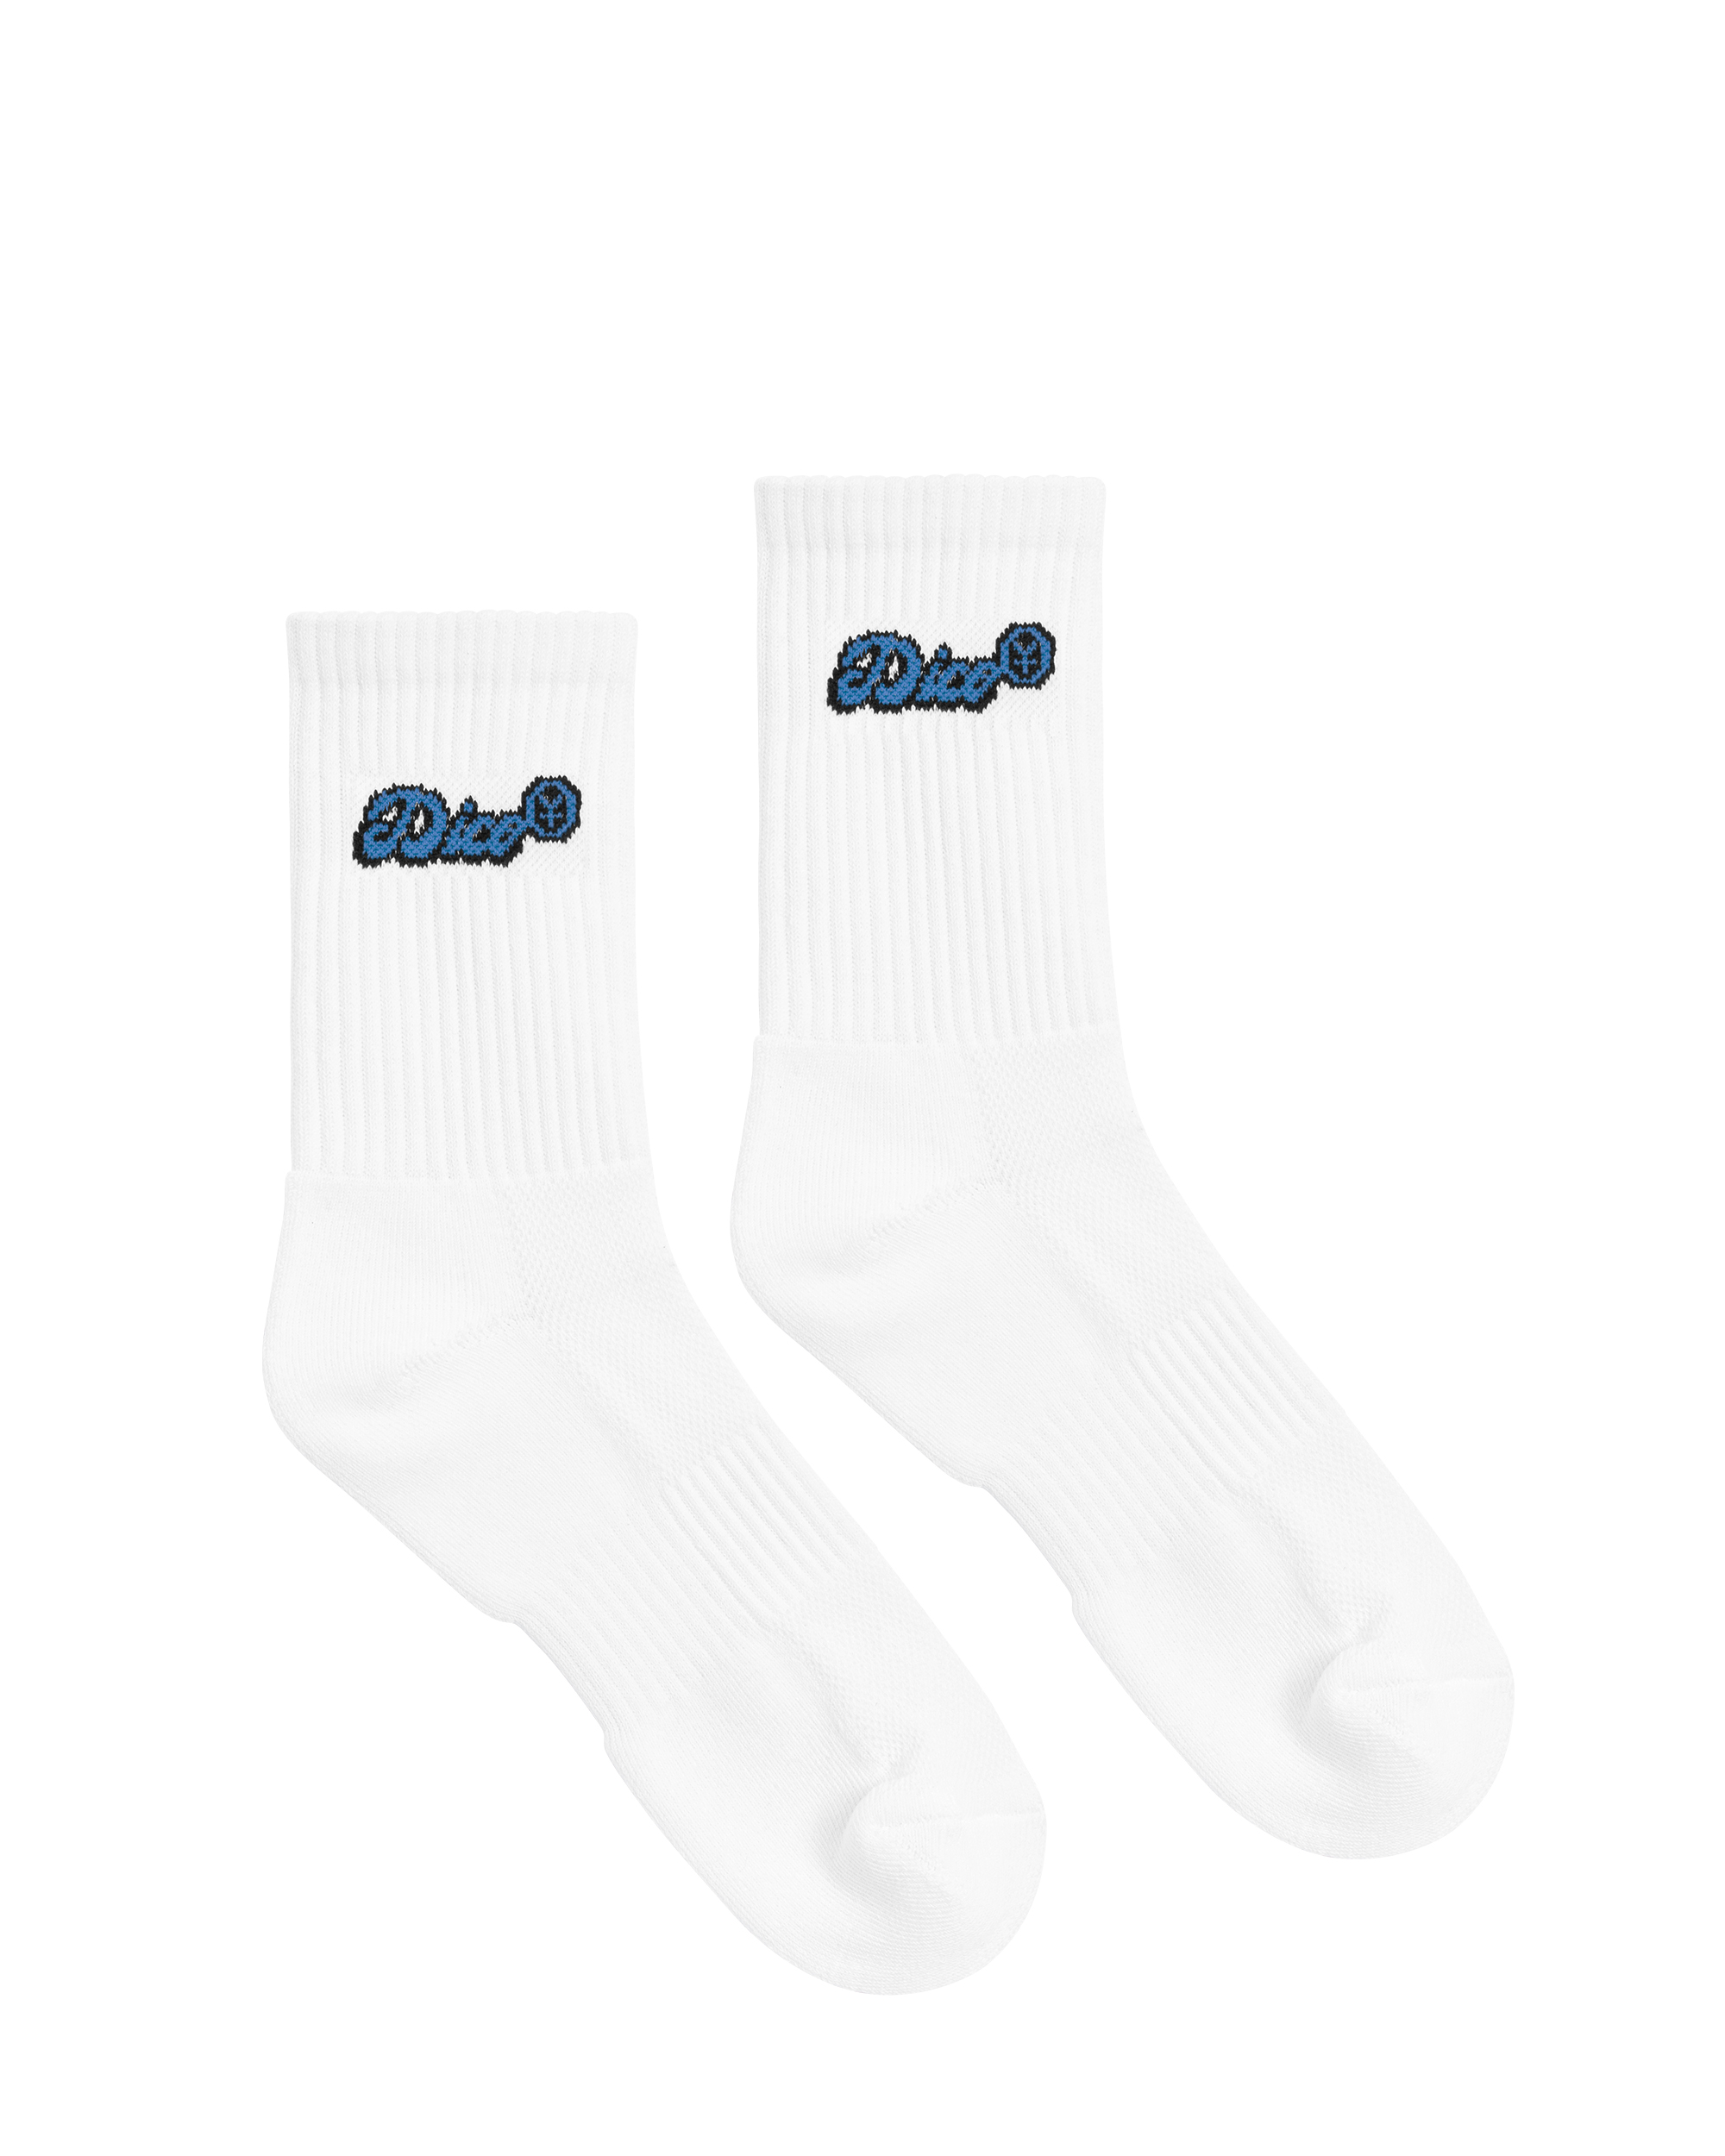 Dico Comfy Socks - Blue/White